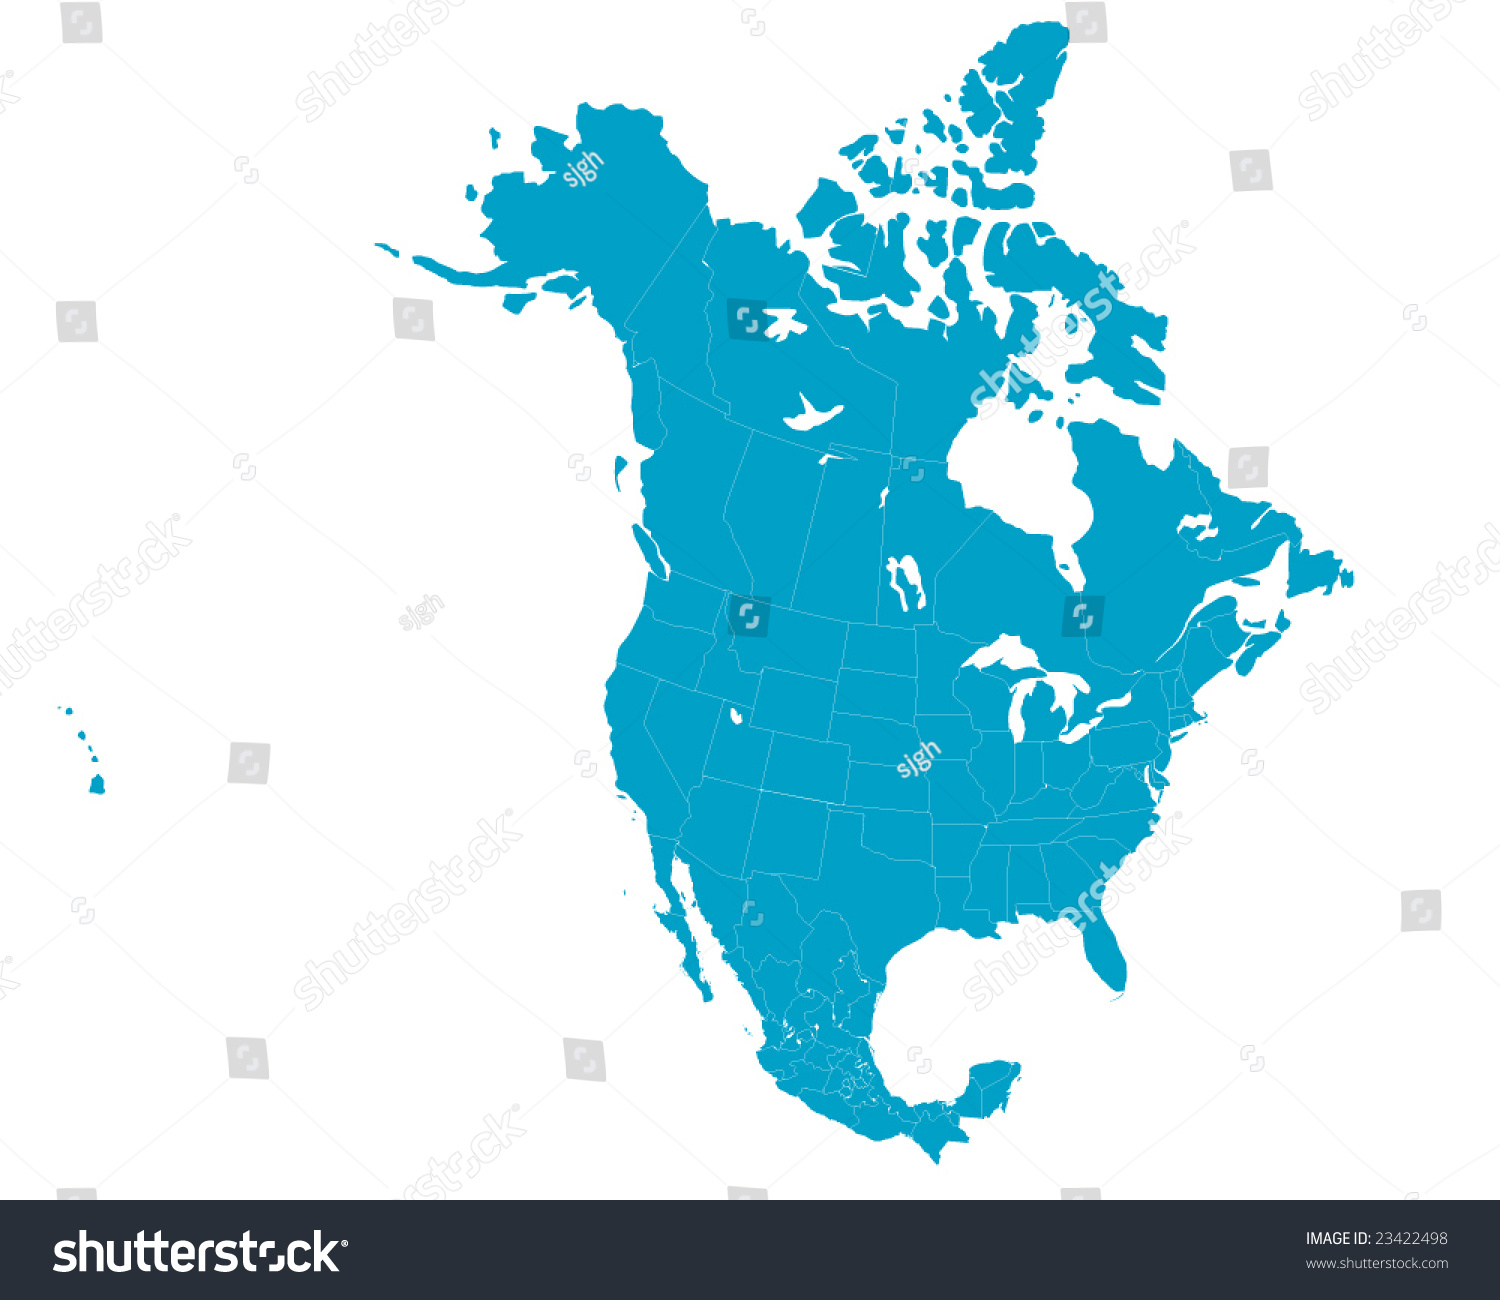 clipart map north america - photo #48